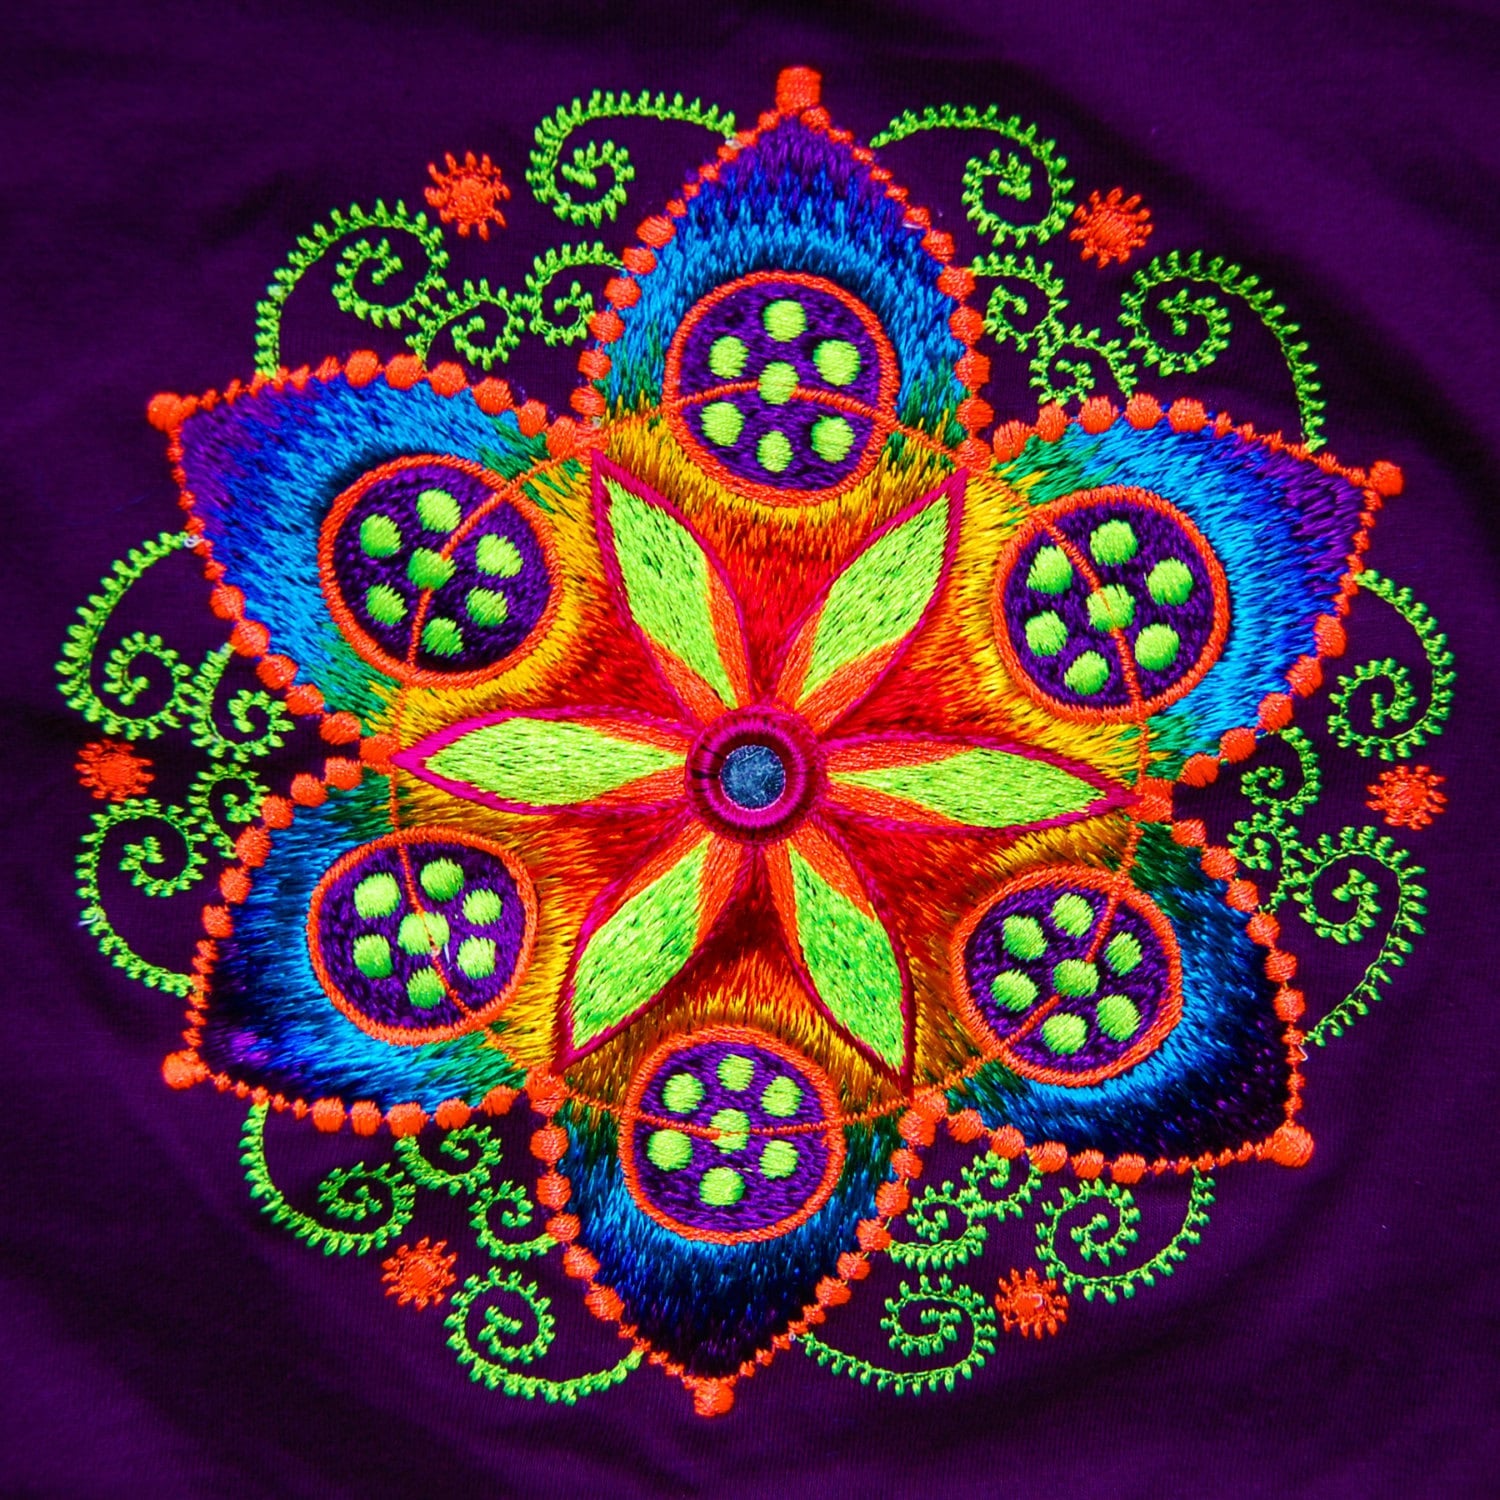 purple crop circle T-Shirt fractal flower of life blacklight handmade embroidery no print goa t-shirt